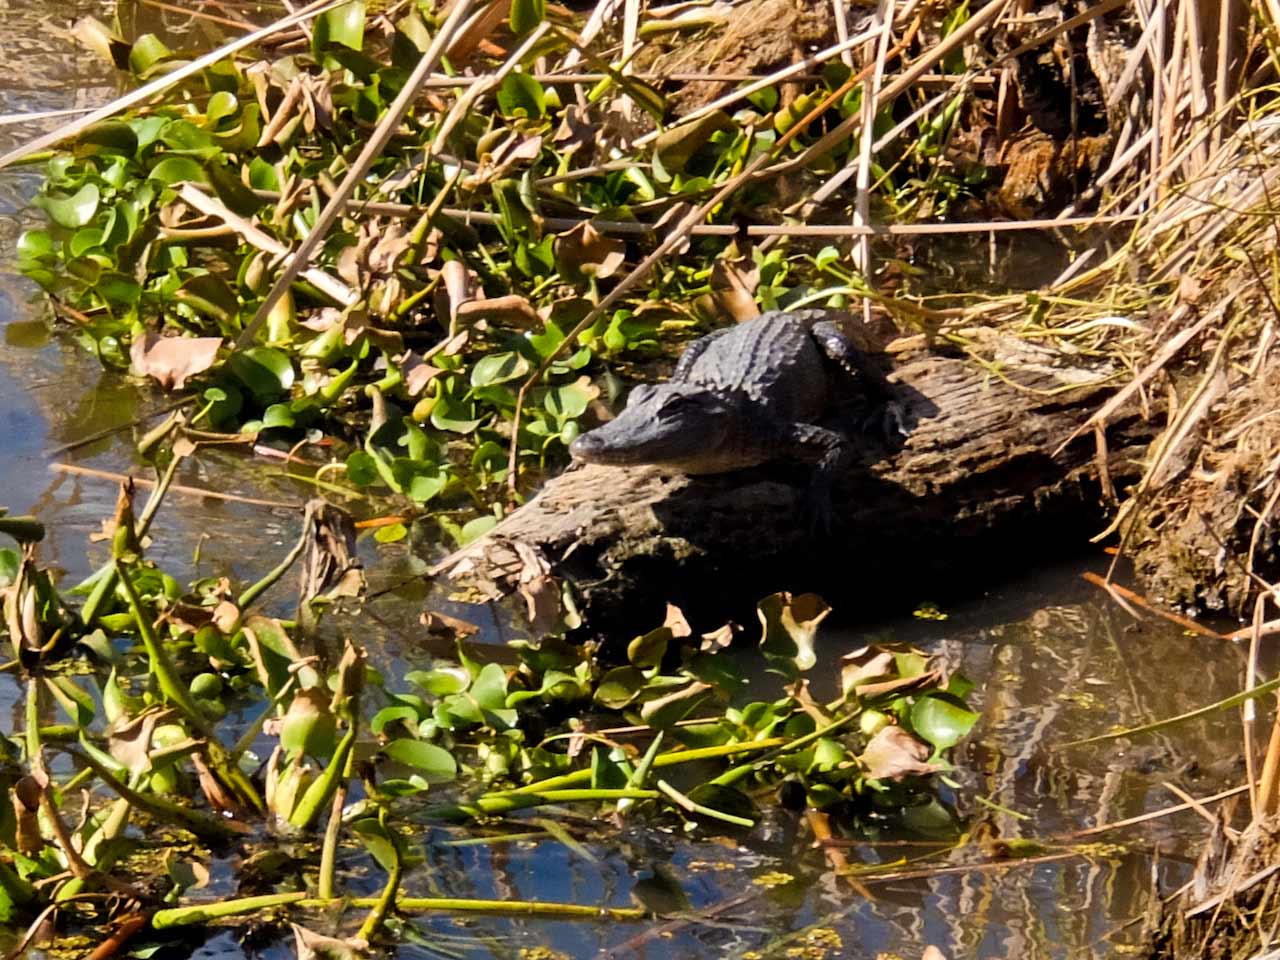 Alligator on a log in Louisiana swamp